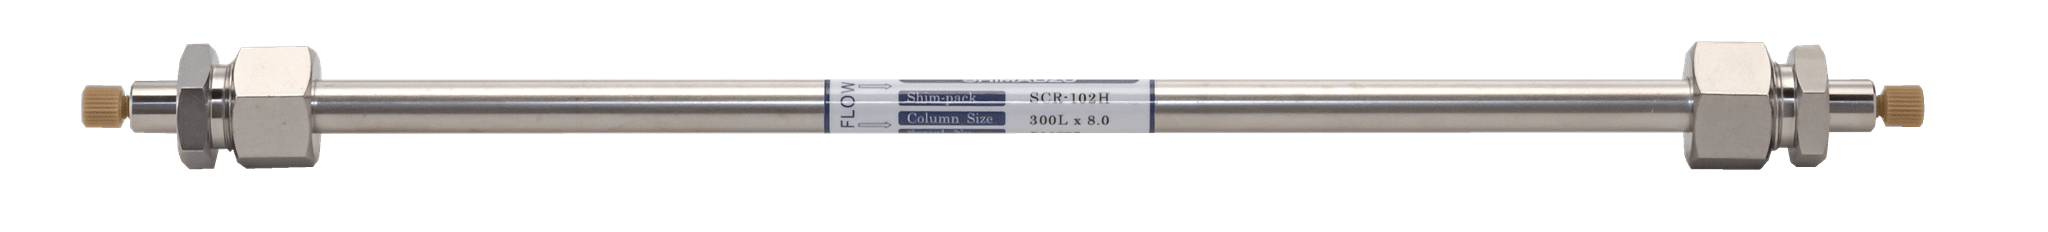 Obrázok výrobcu Shim-pack SCR-102H; 300 x 8.0